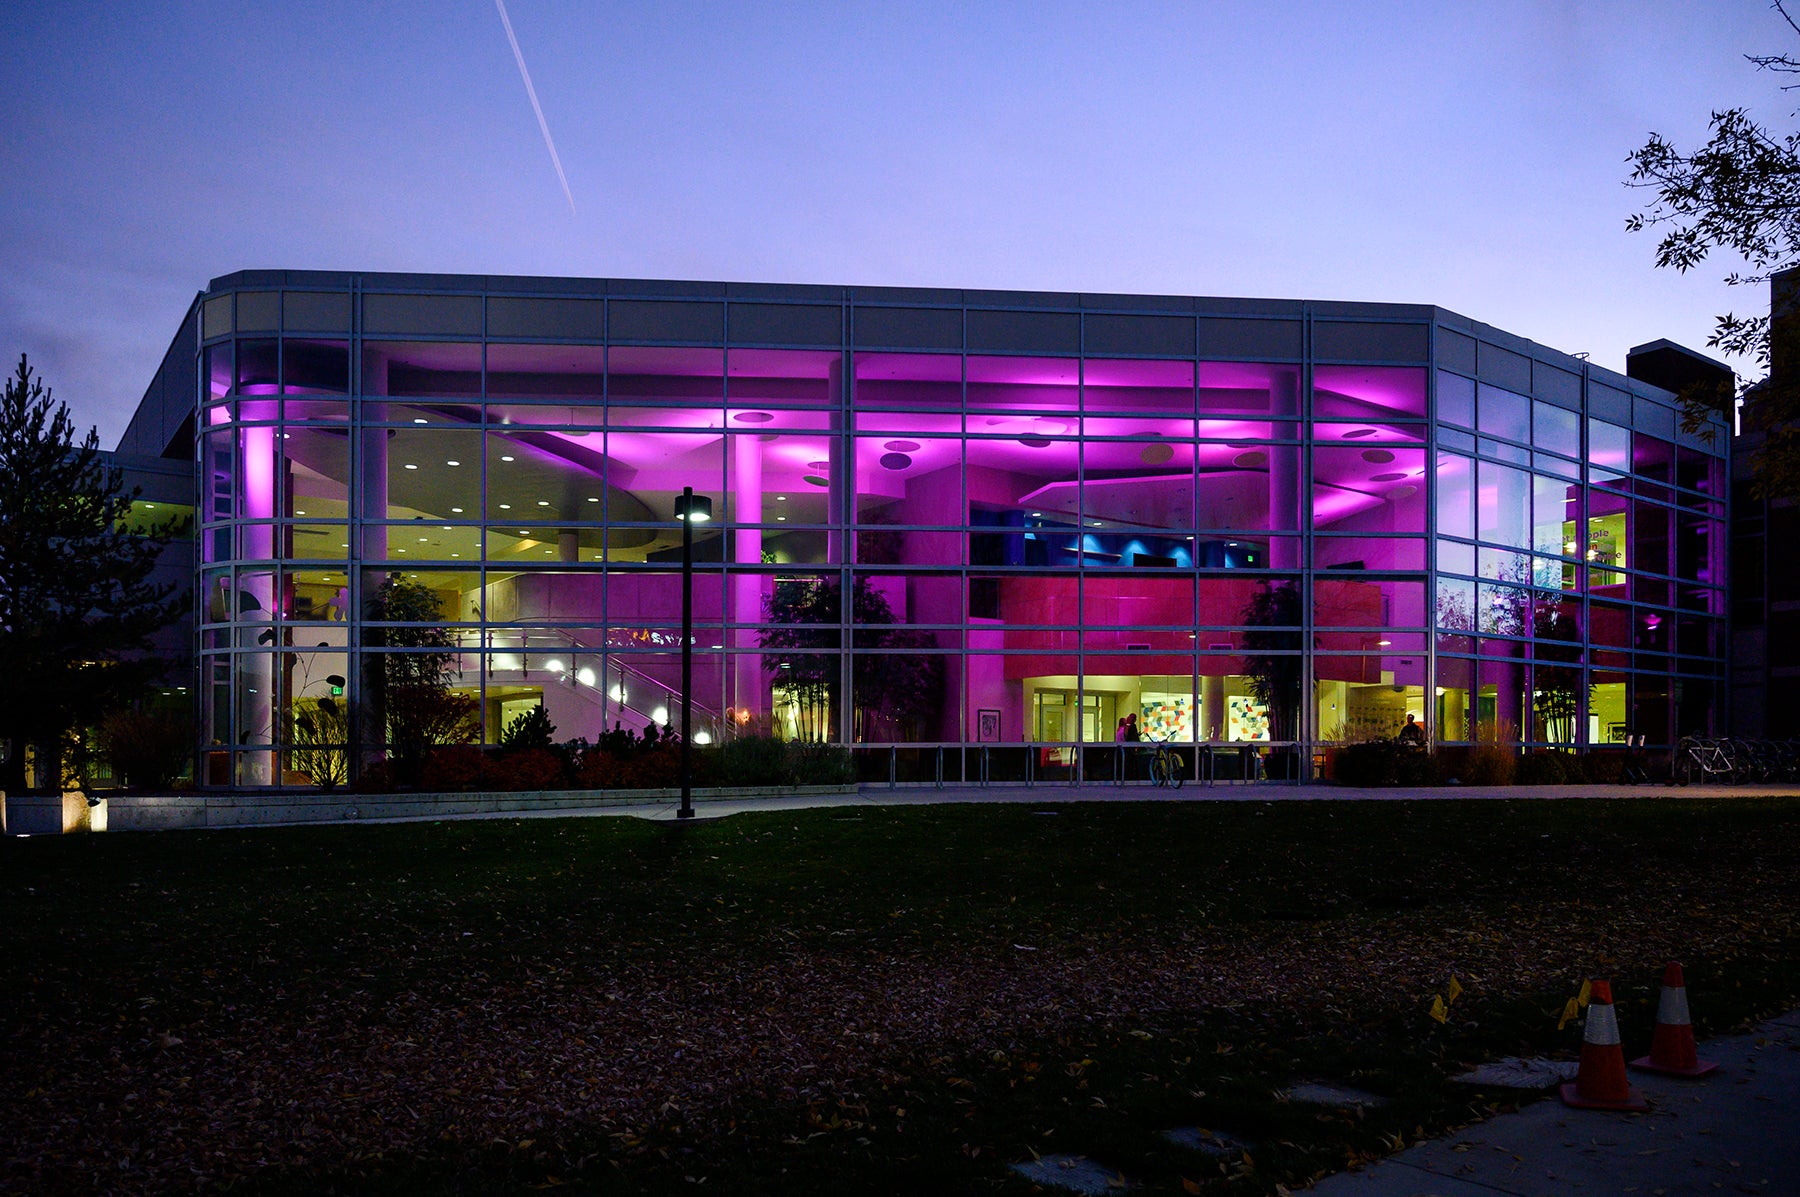 Purple lights illuminate the Student Union Building